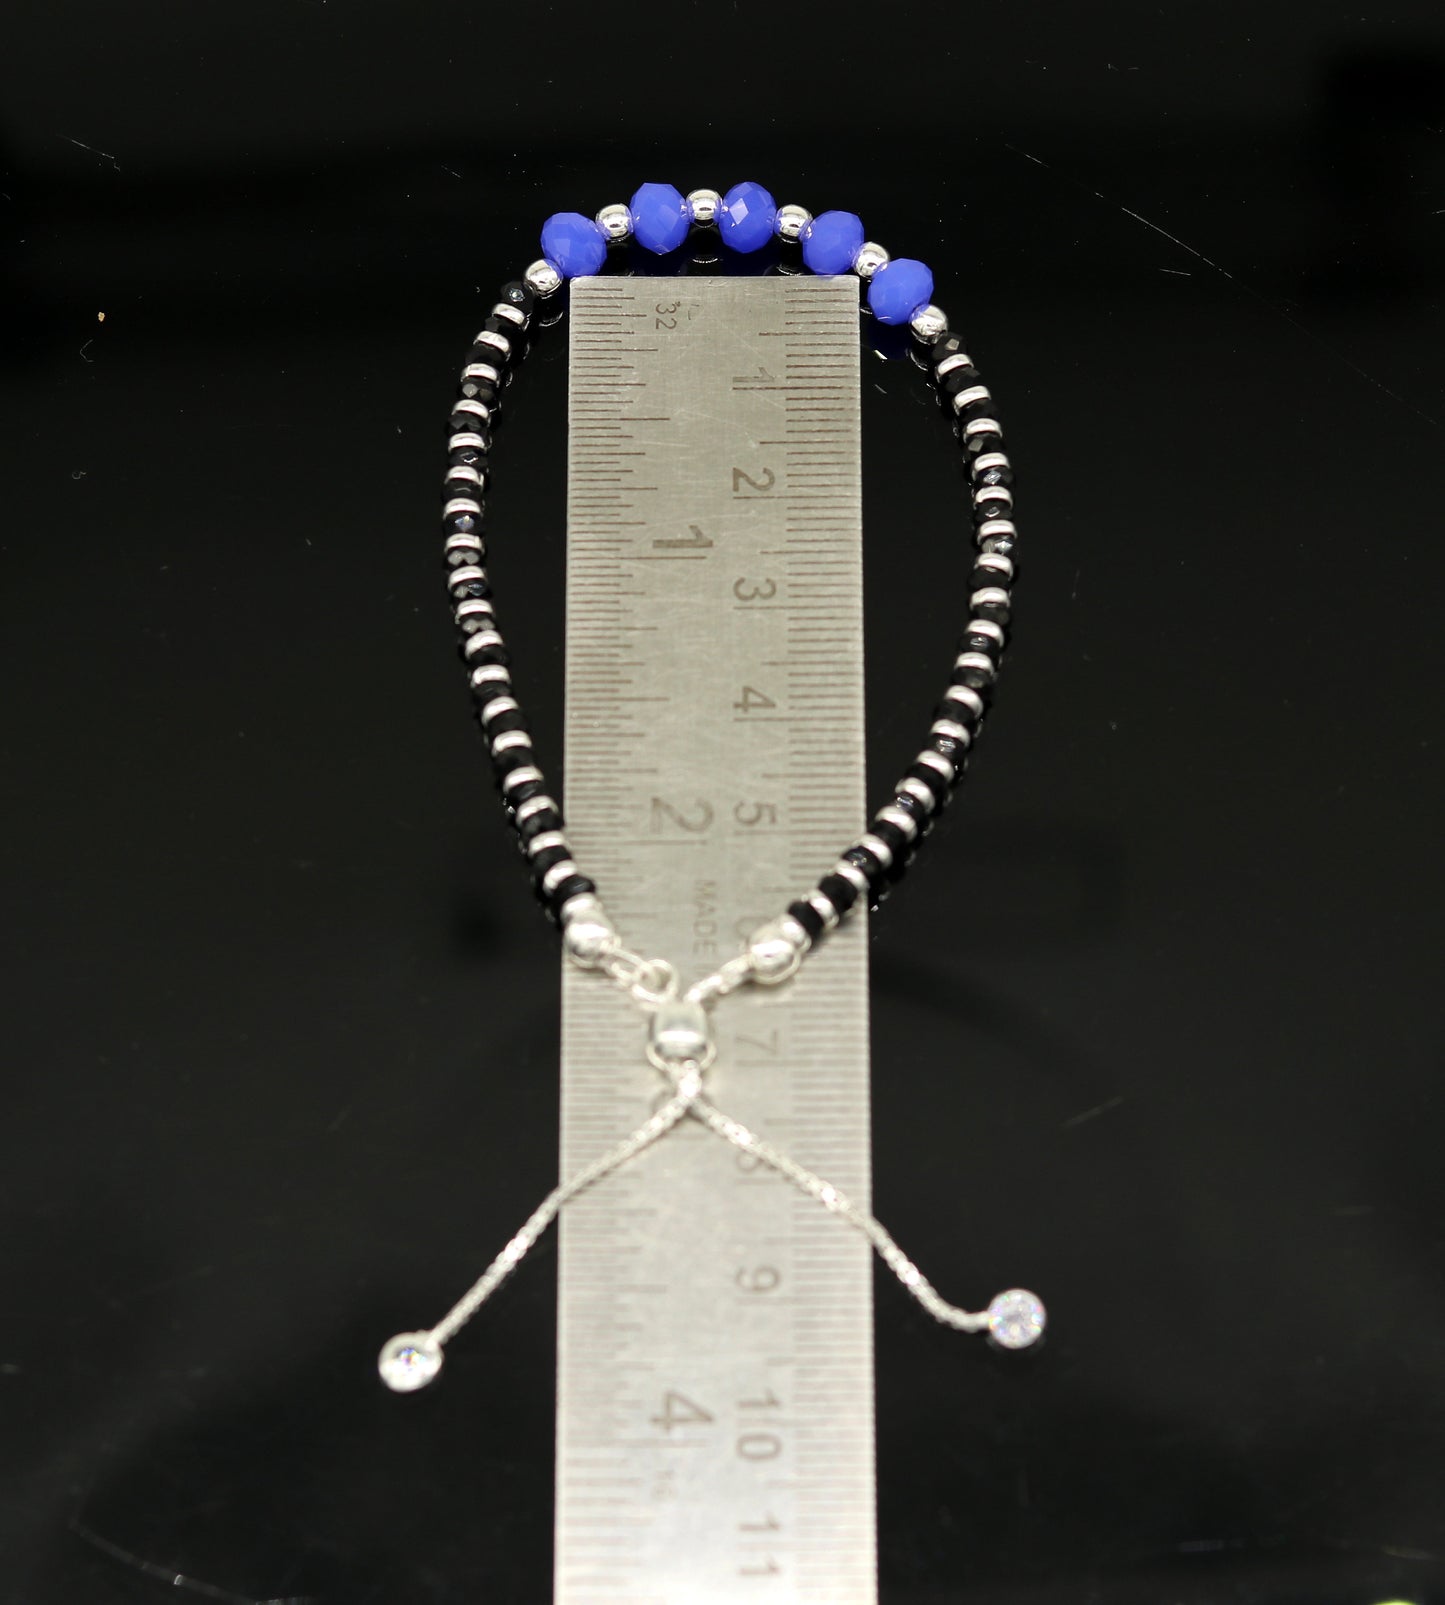 7" long 925 sterling silver gorgeous silver and black beads adjustable bracelet, charm bracelet, customized bracelet girl's jewelry sbr166 - TRIBAL ORNAMENTS